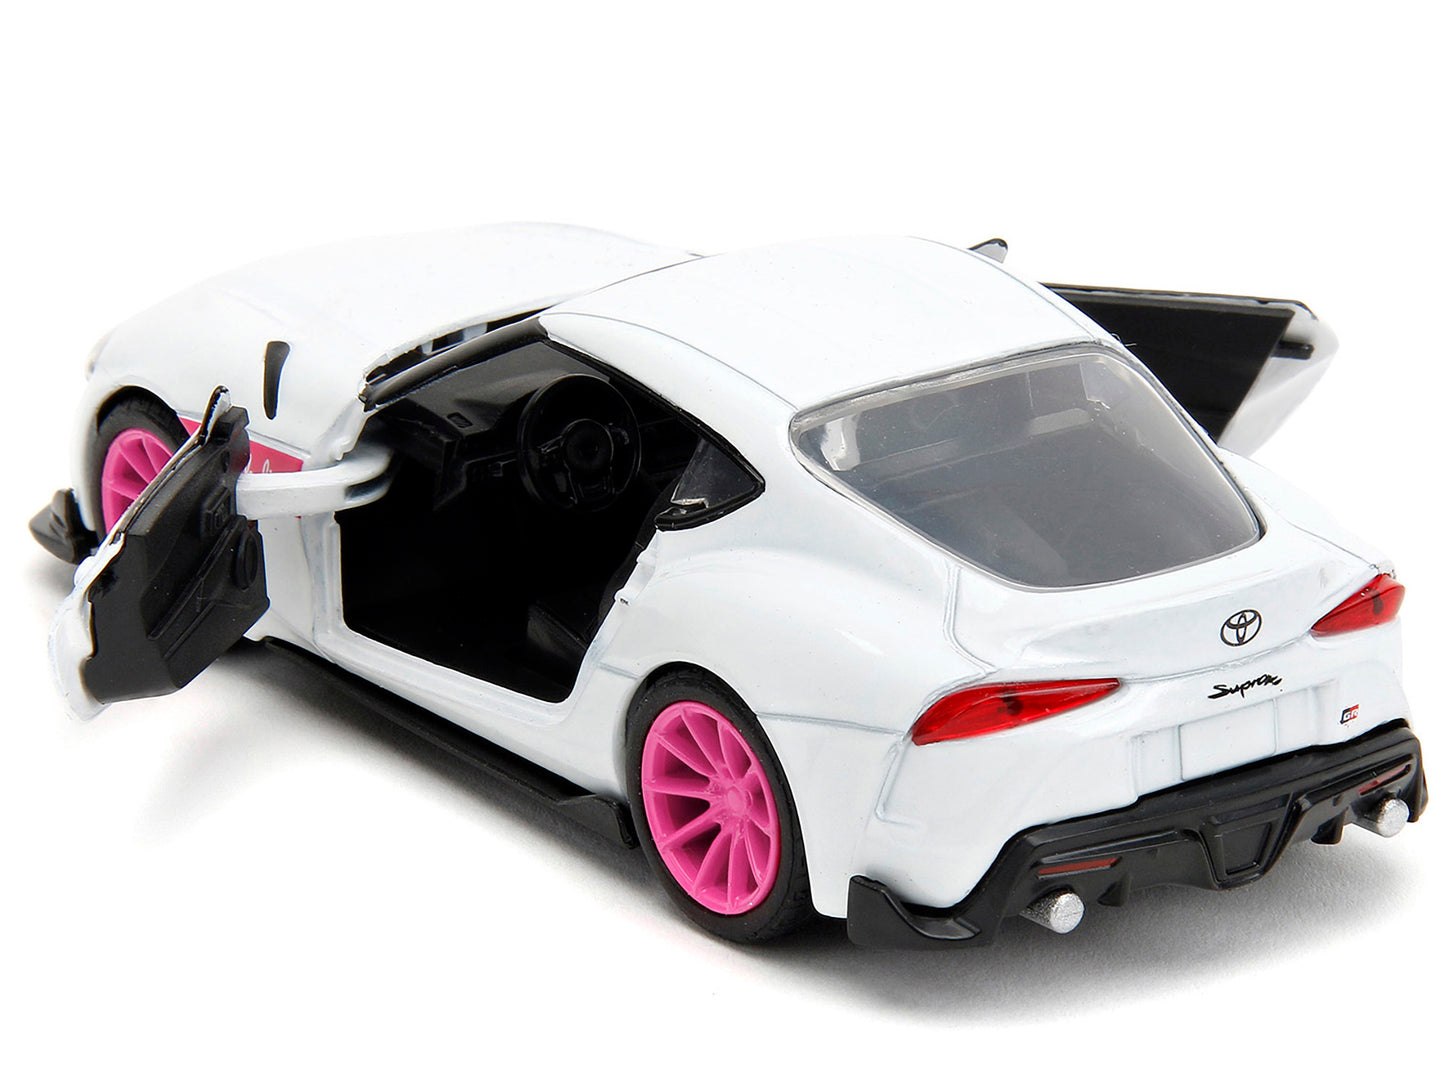 2020 Toyota Supra White Metallic with Pink Wheels "Pink Slips" Series 1/32 Diecast Model Car by Jada